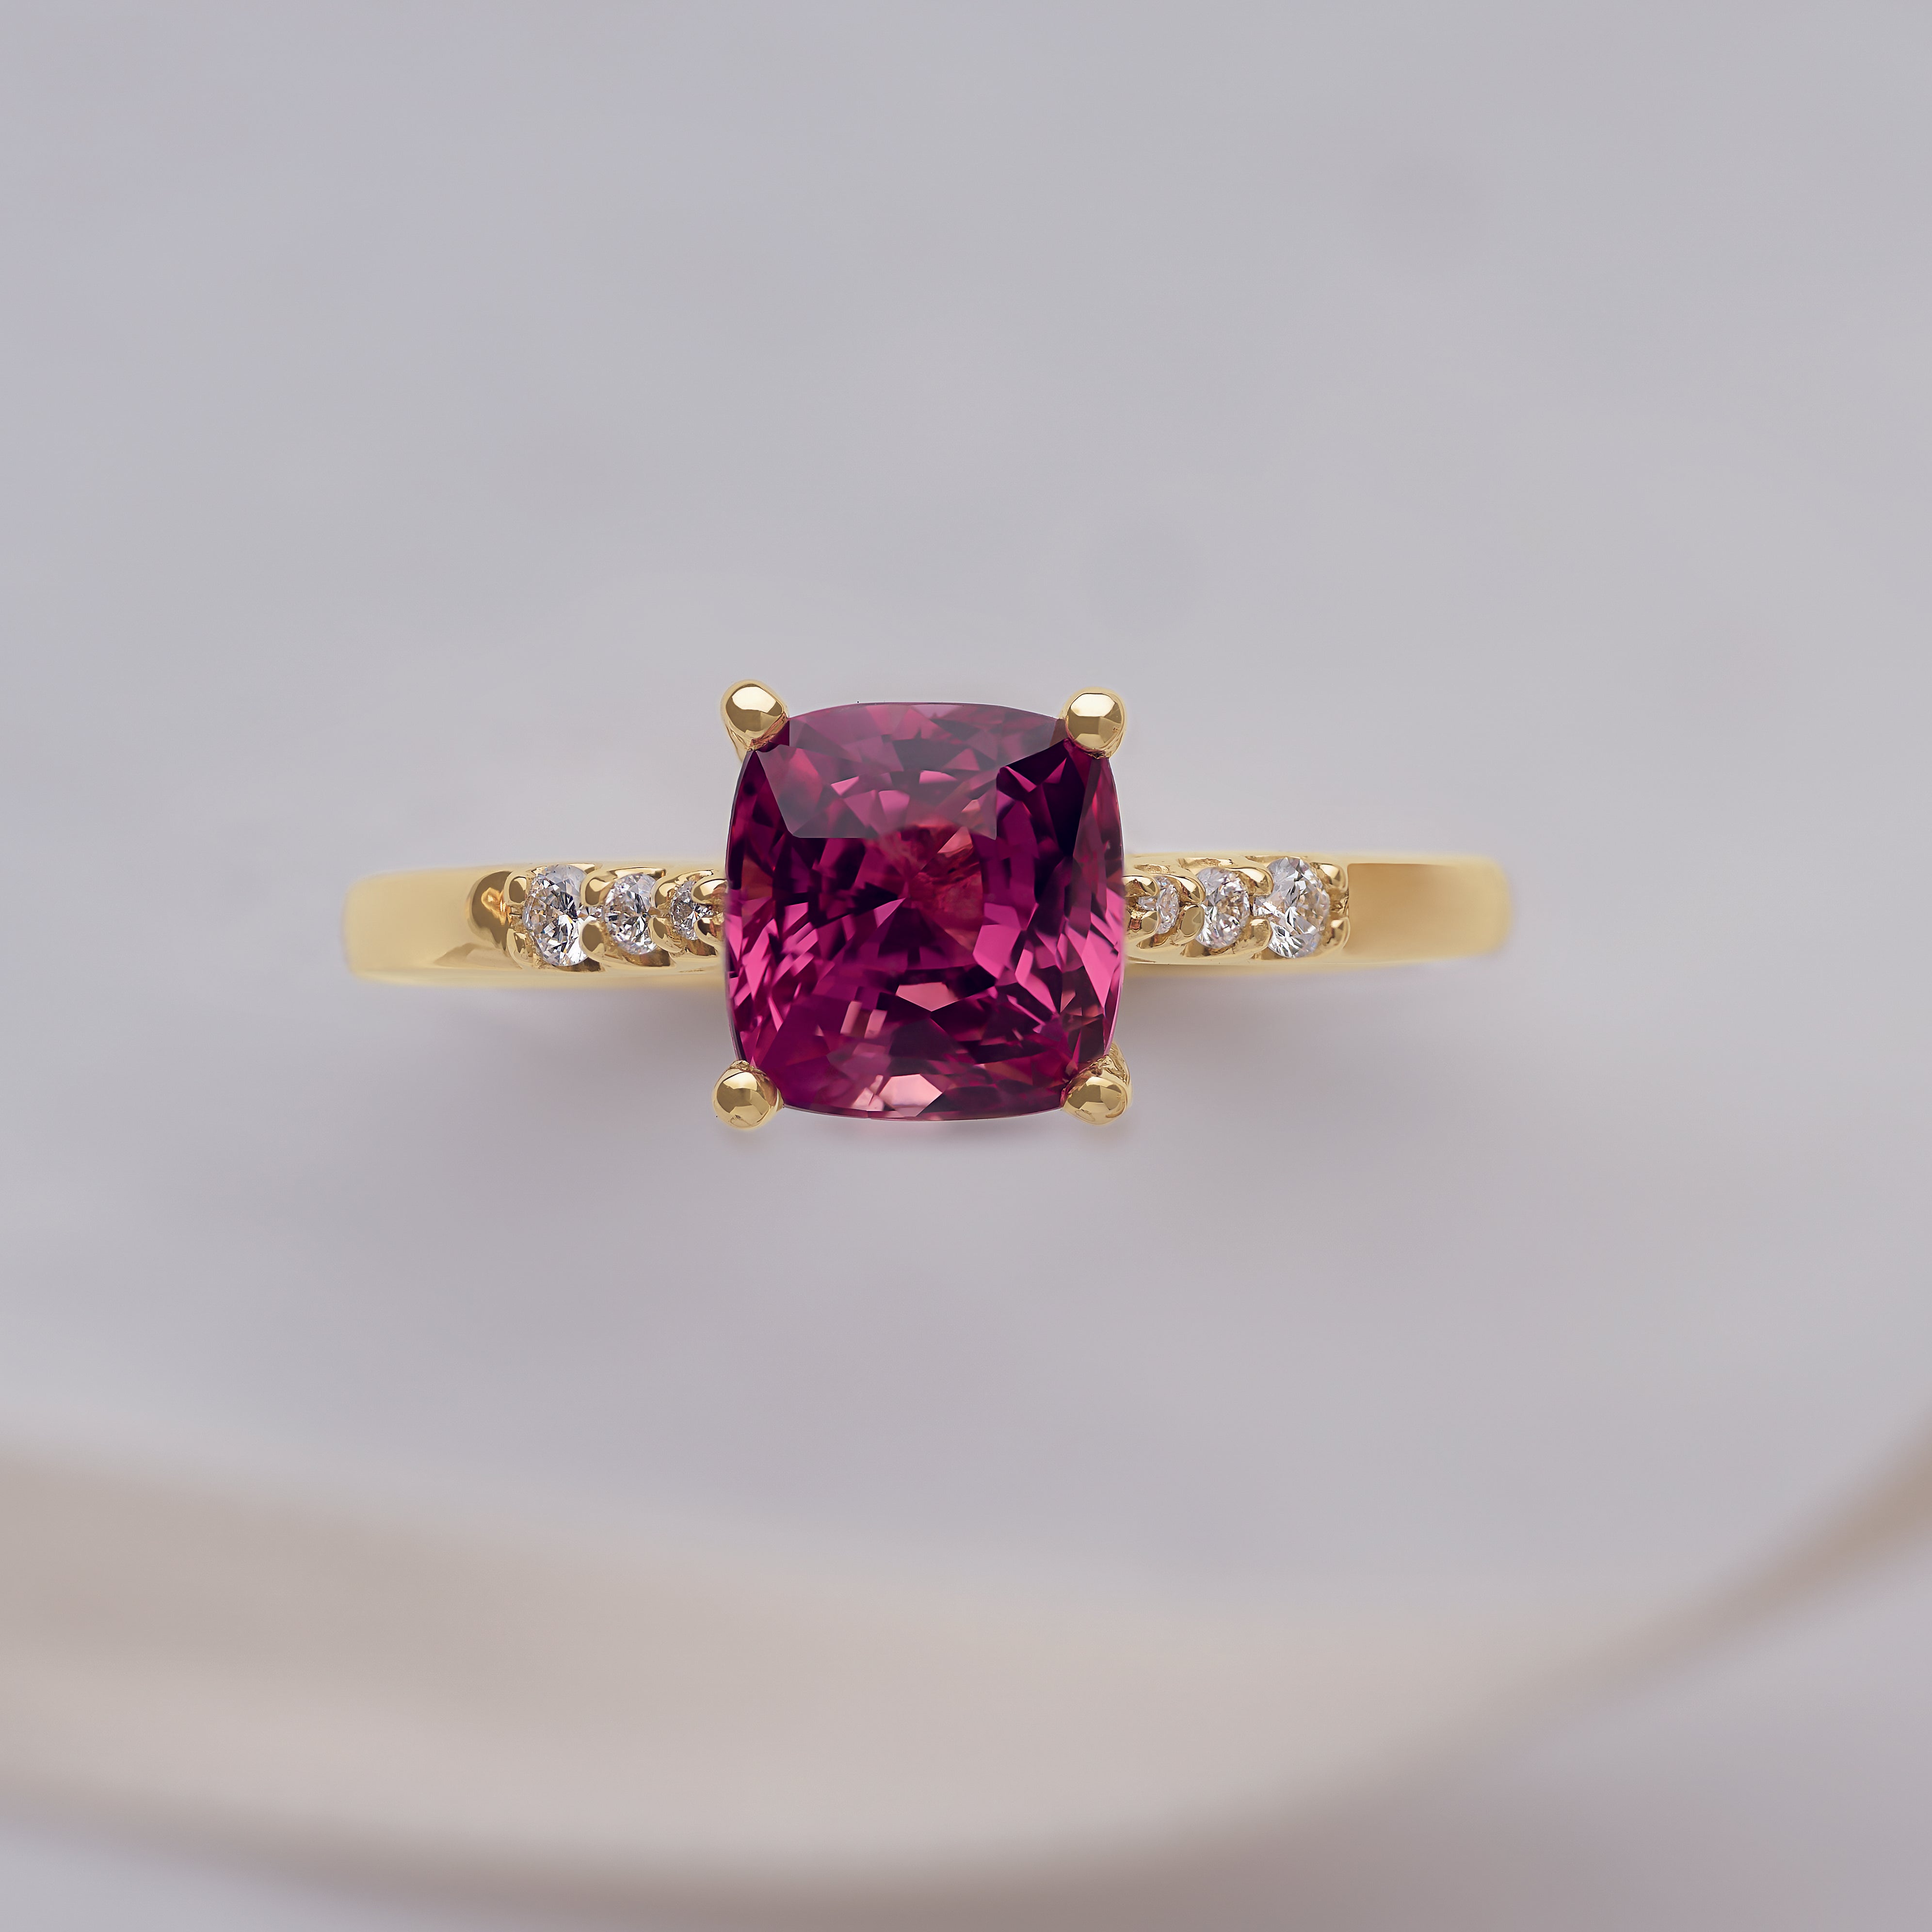 Tourmaline, diamond and gold gemstone engagement ring